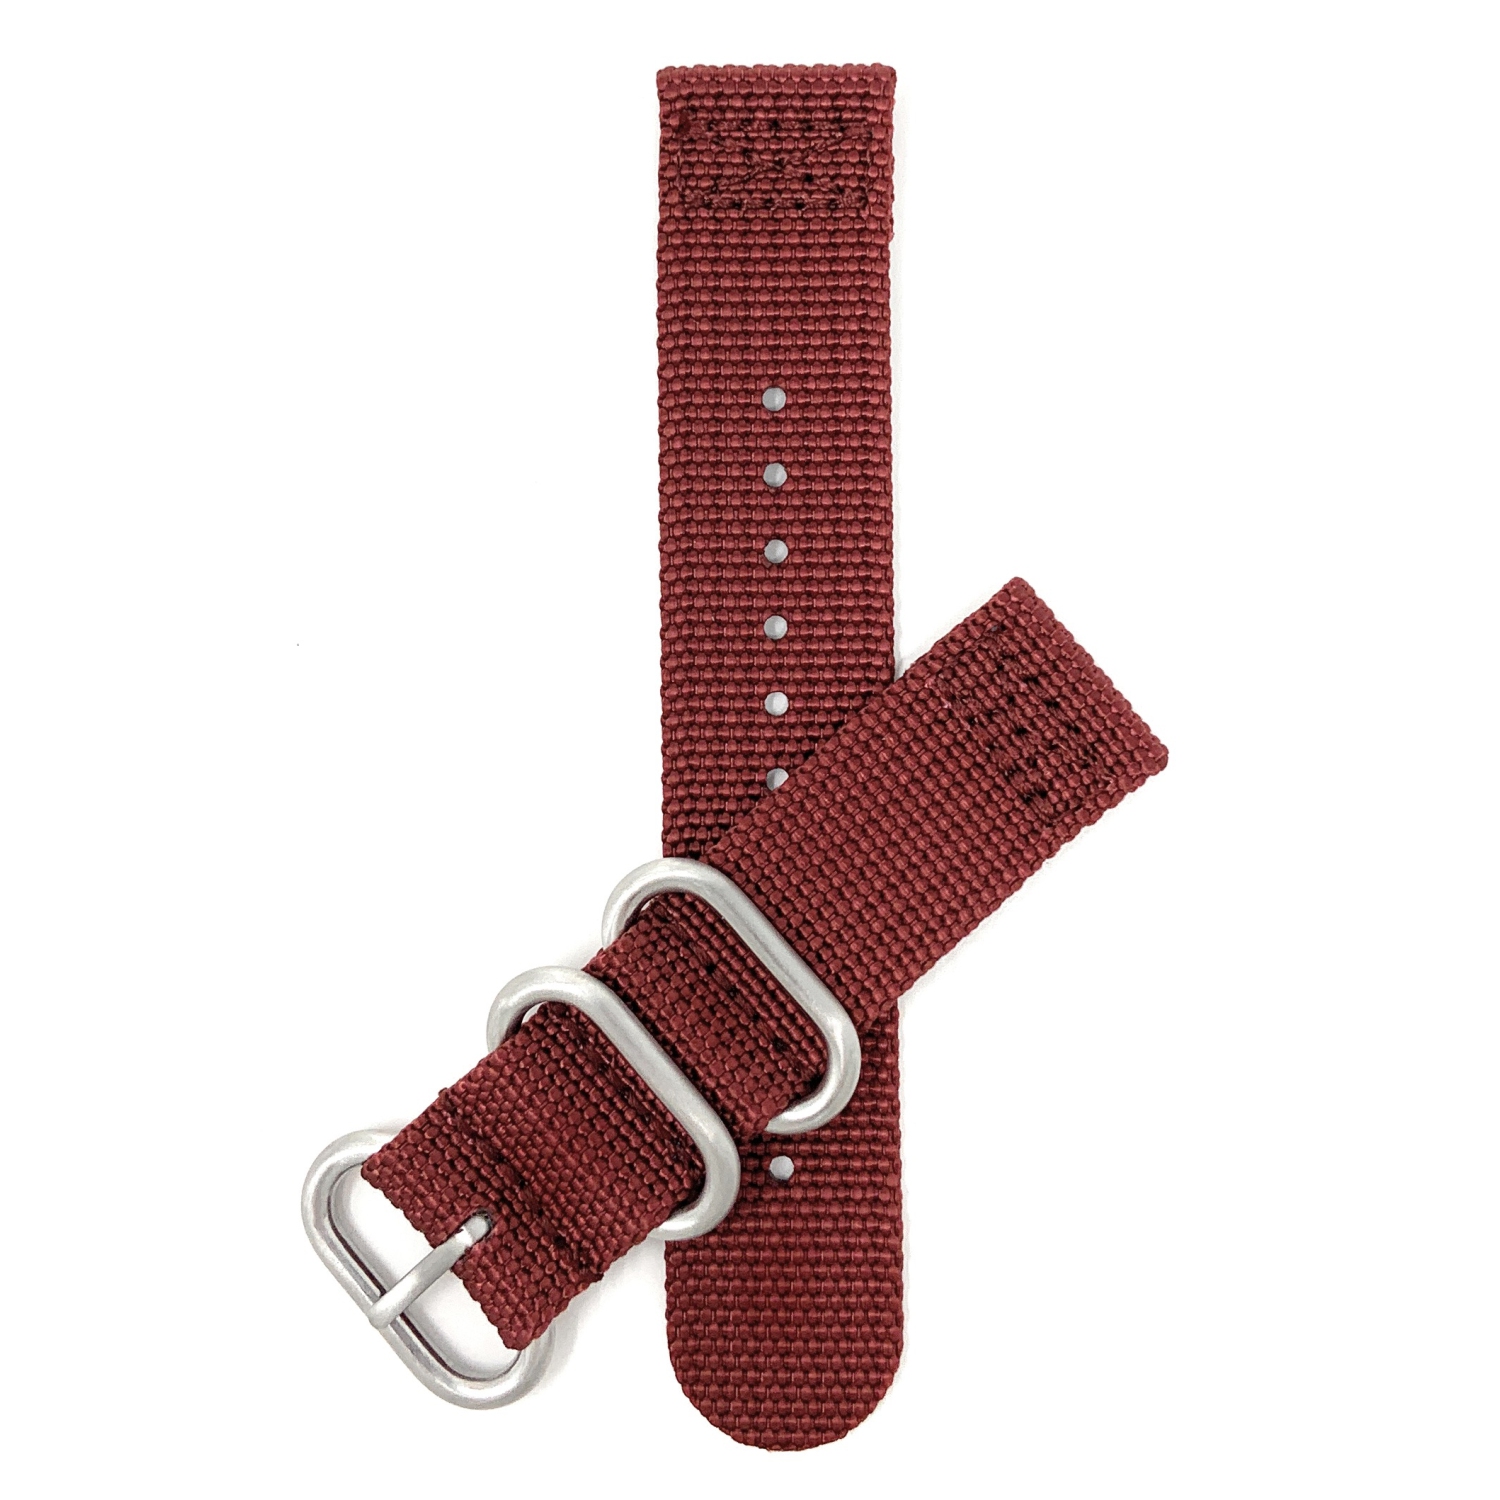 Bandini 2 Piece Nylon Zulu Smart Watch Band Strap For Amazfit Bip, U, S, Lite, GTR 42mm, GTS - 20mm, Burgundy